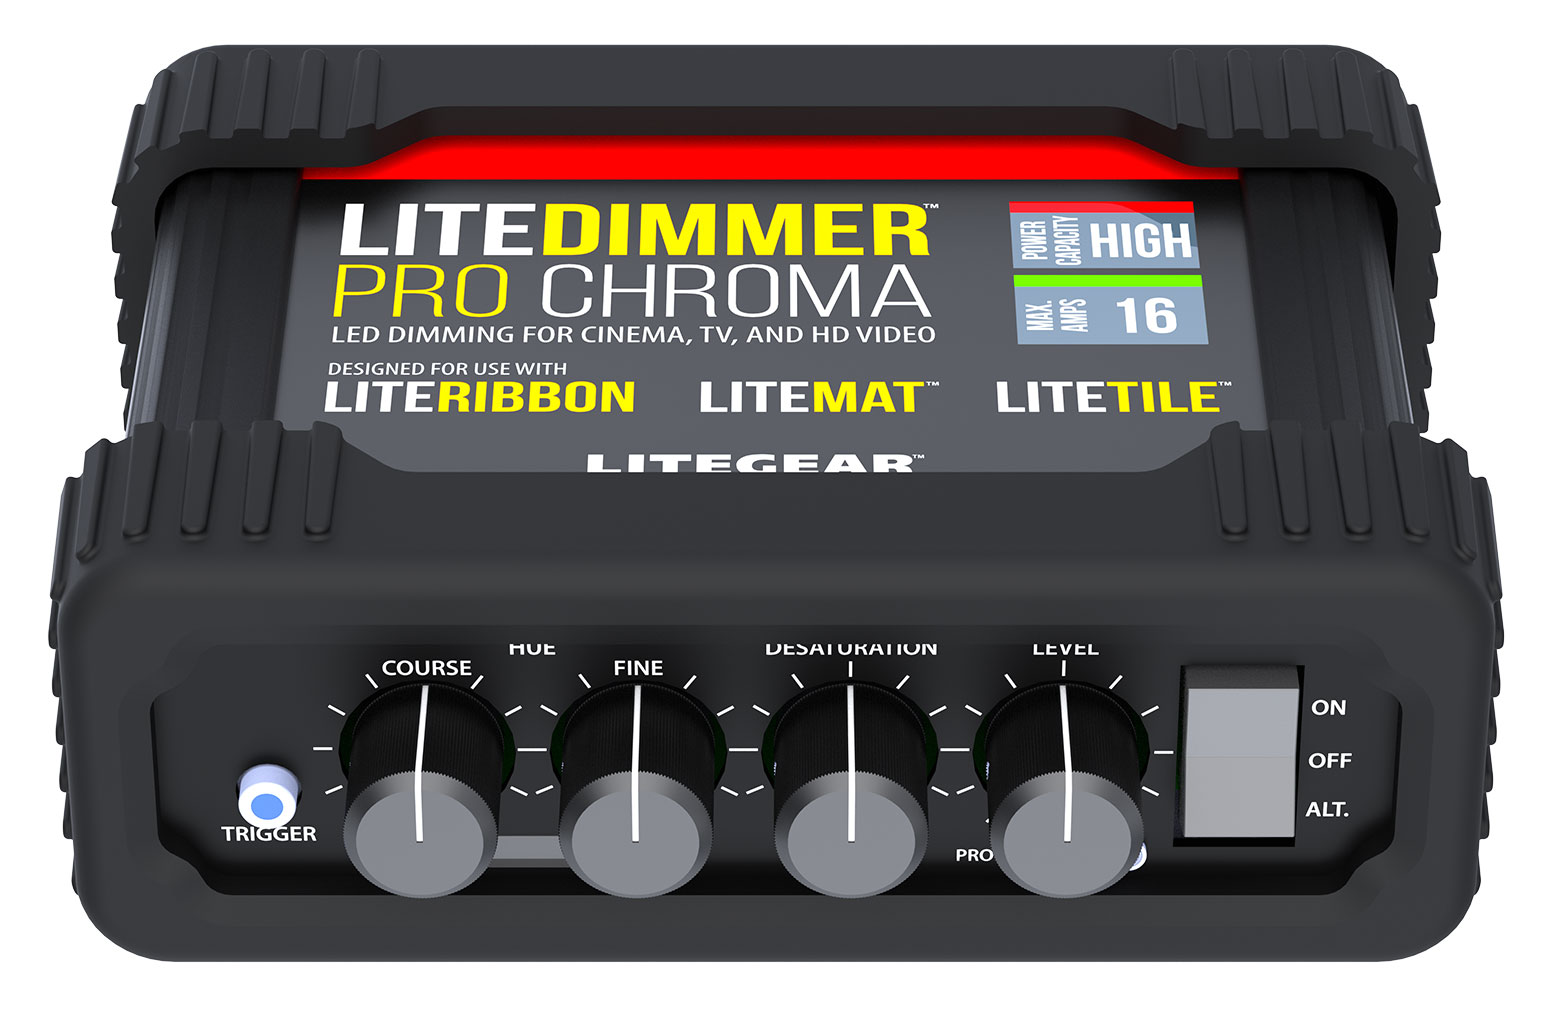 LiteDimmer Pro Chroma